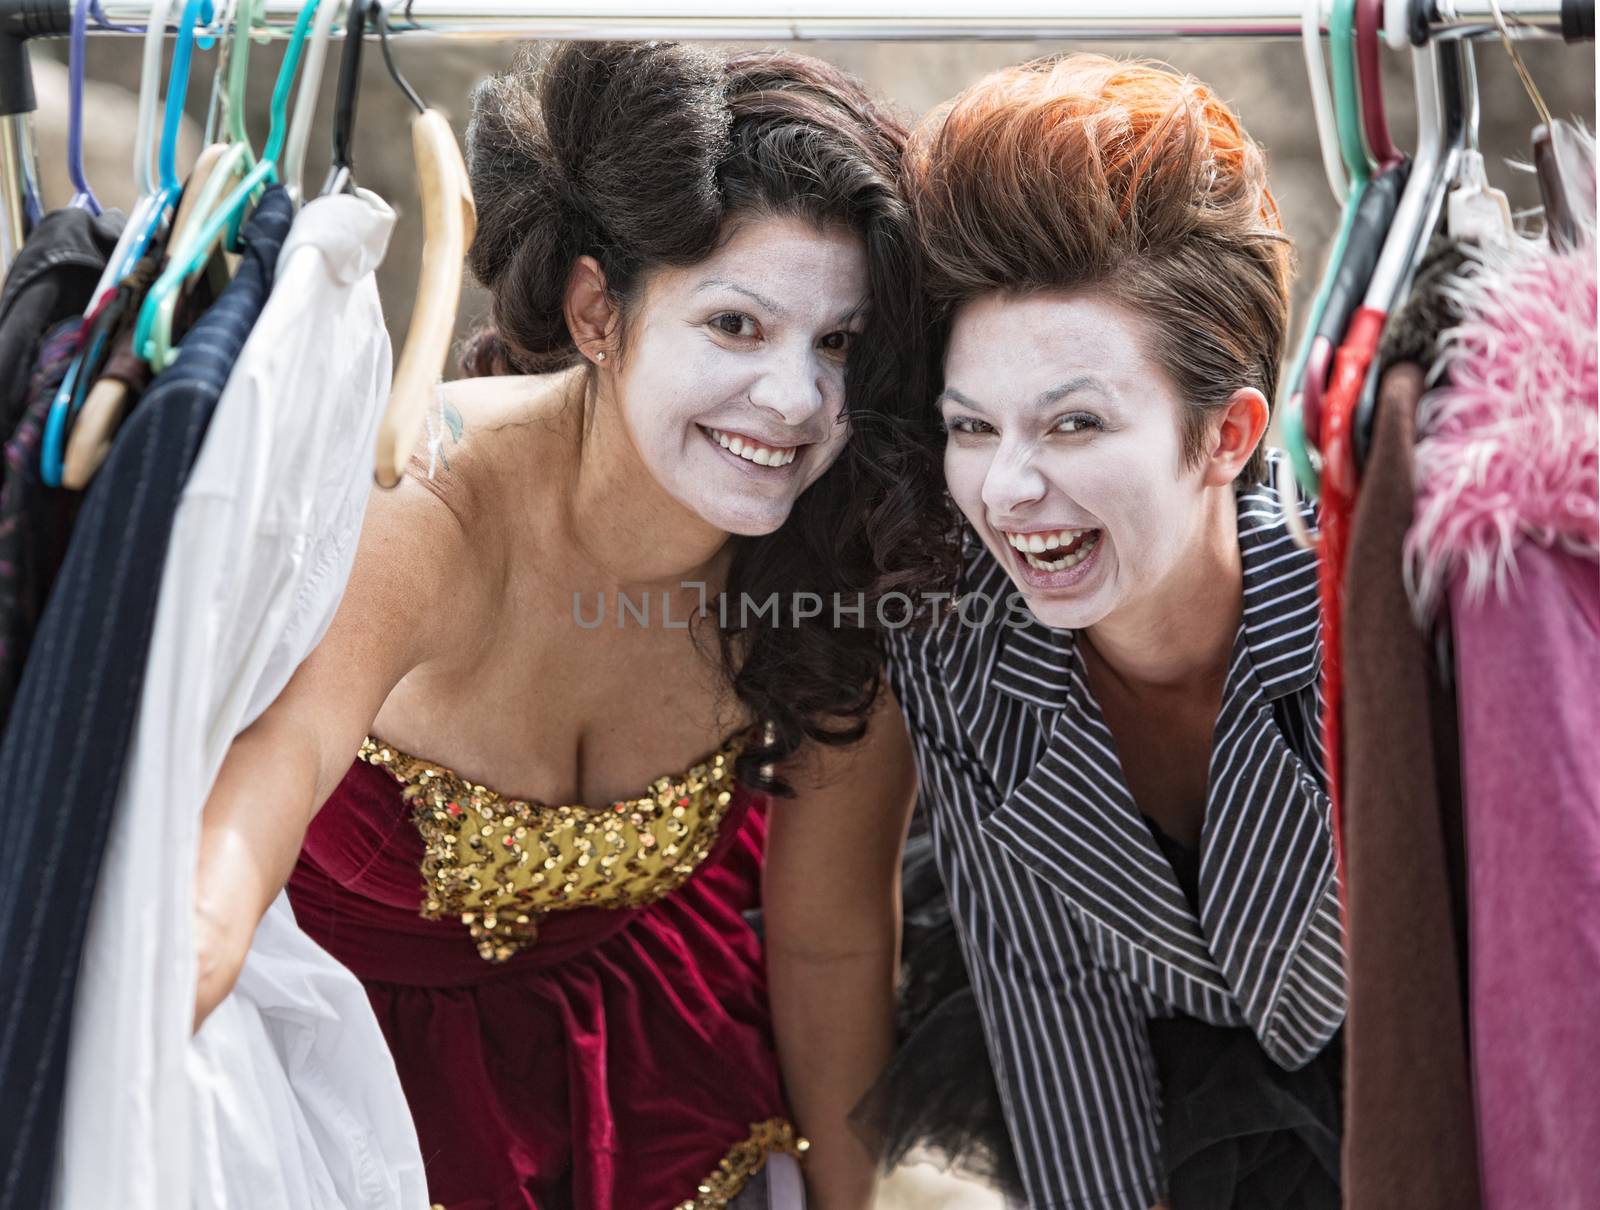 Comedia Del Arte actors laughing at clothing rack